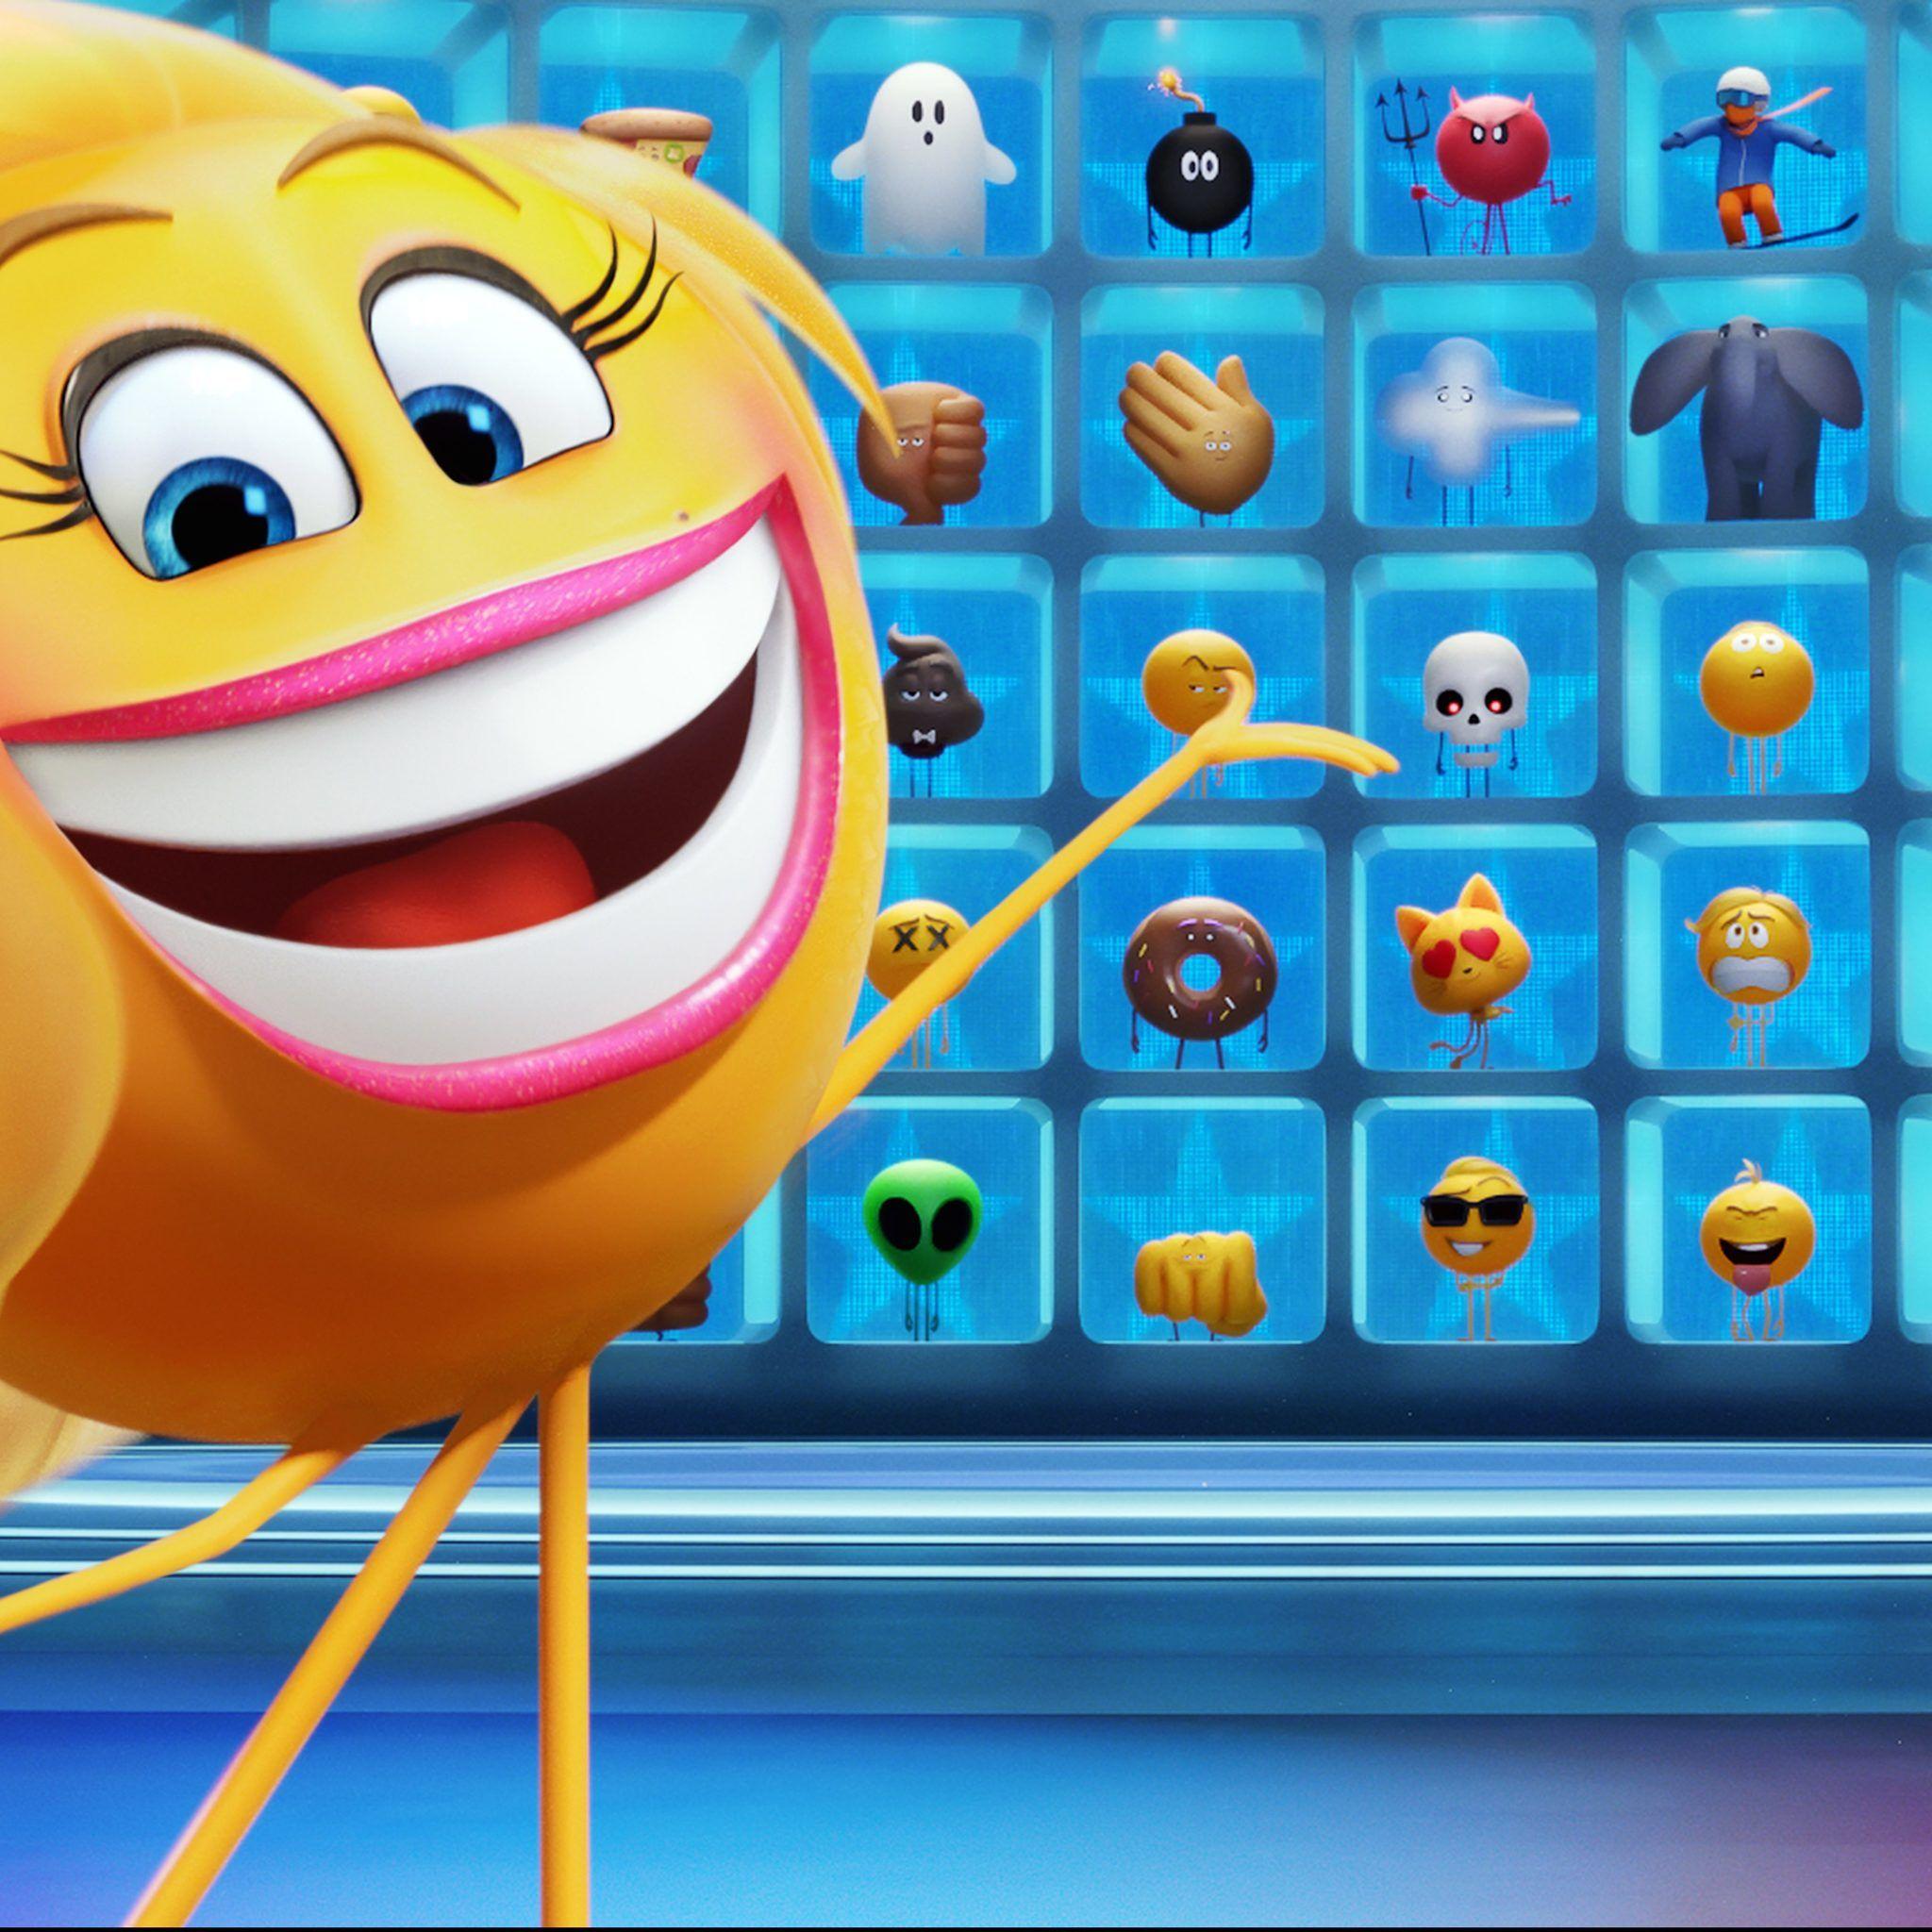 The Emoji Movie 2017 iPad Air HD 4k Wallpaper, Image